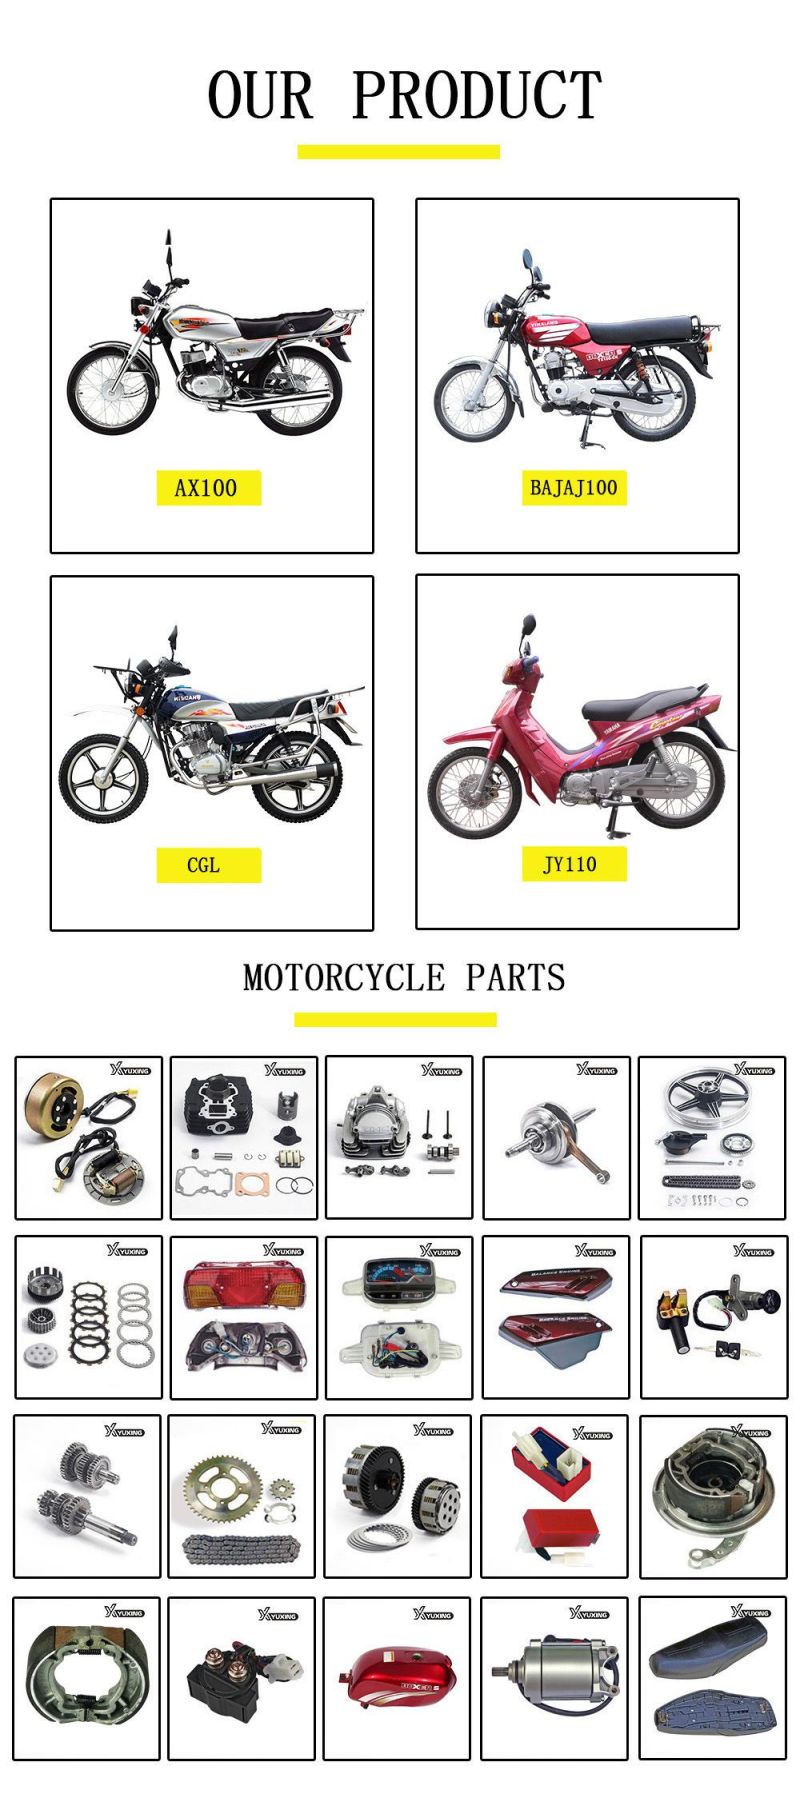 Motorcycle Accessories Gear Shift Lever for Bajaj100